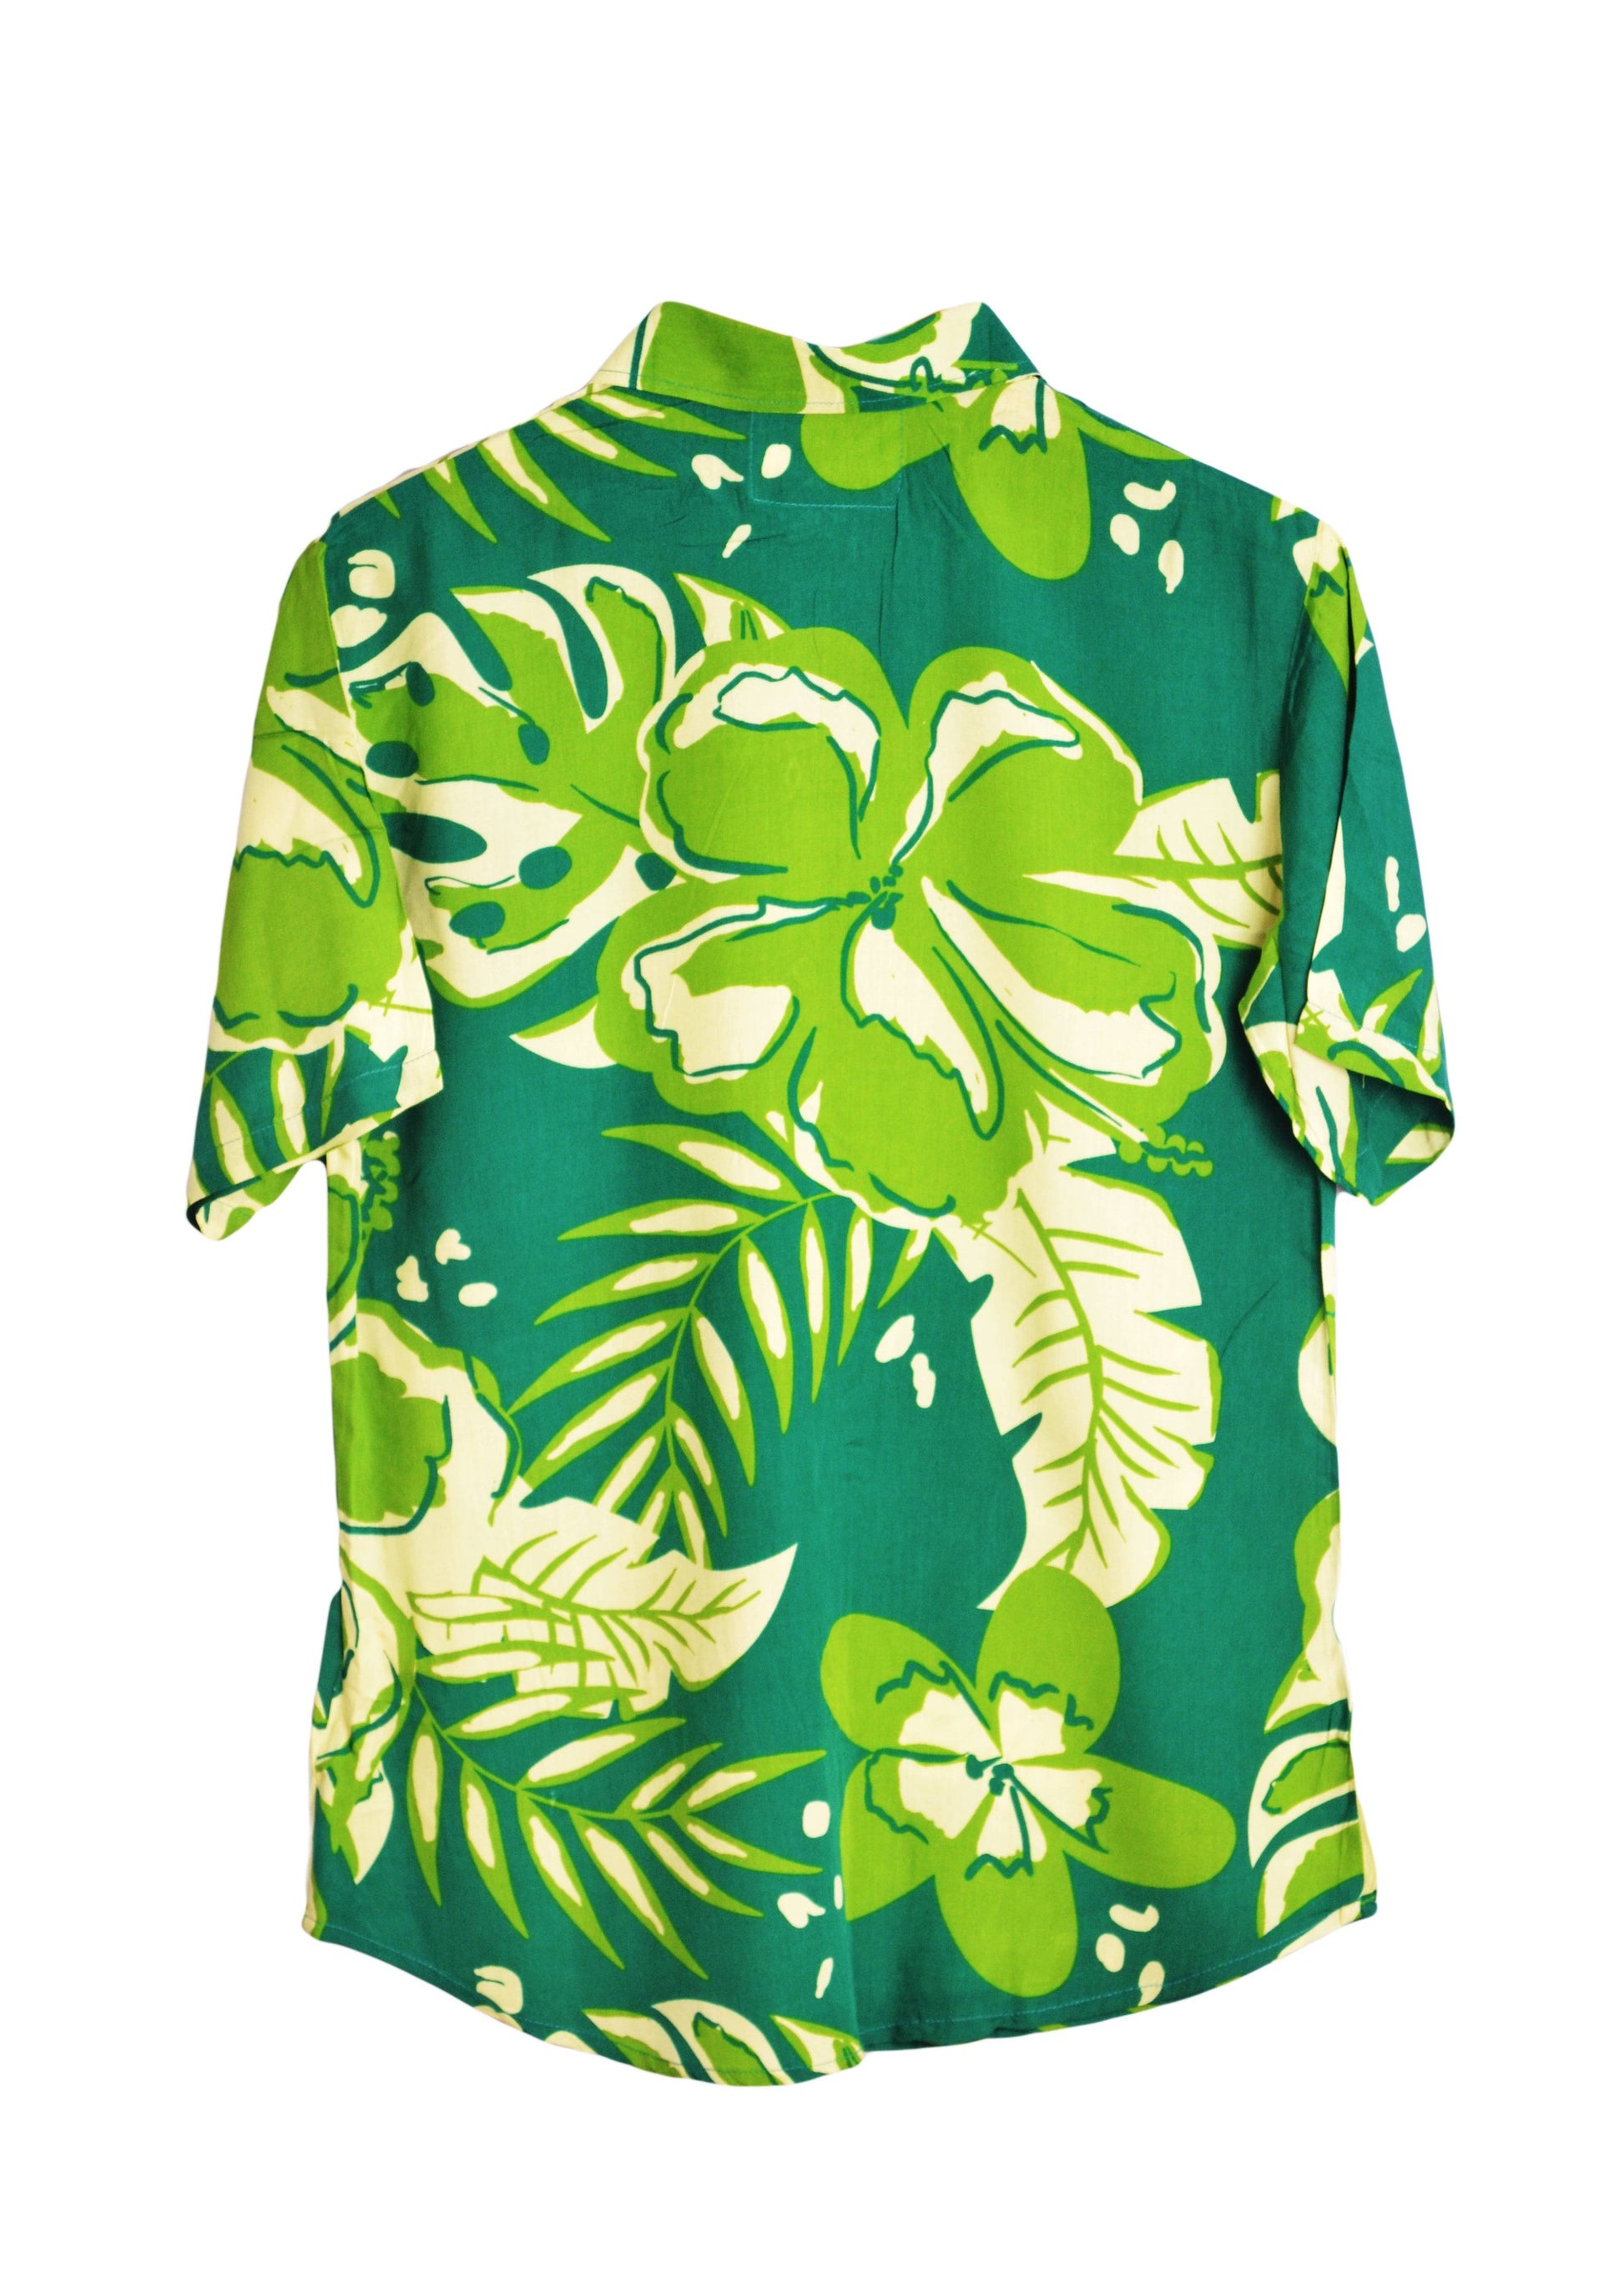 Vus dos chemise hawaienne marque up hawaii verte - gl boutik